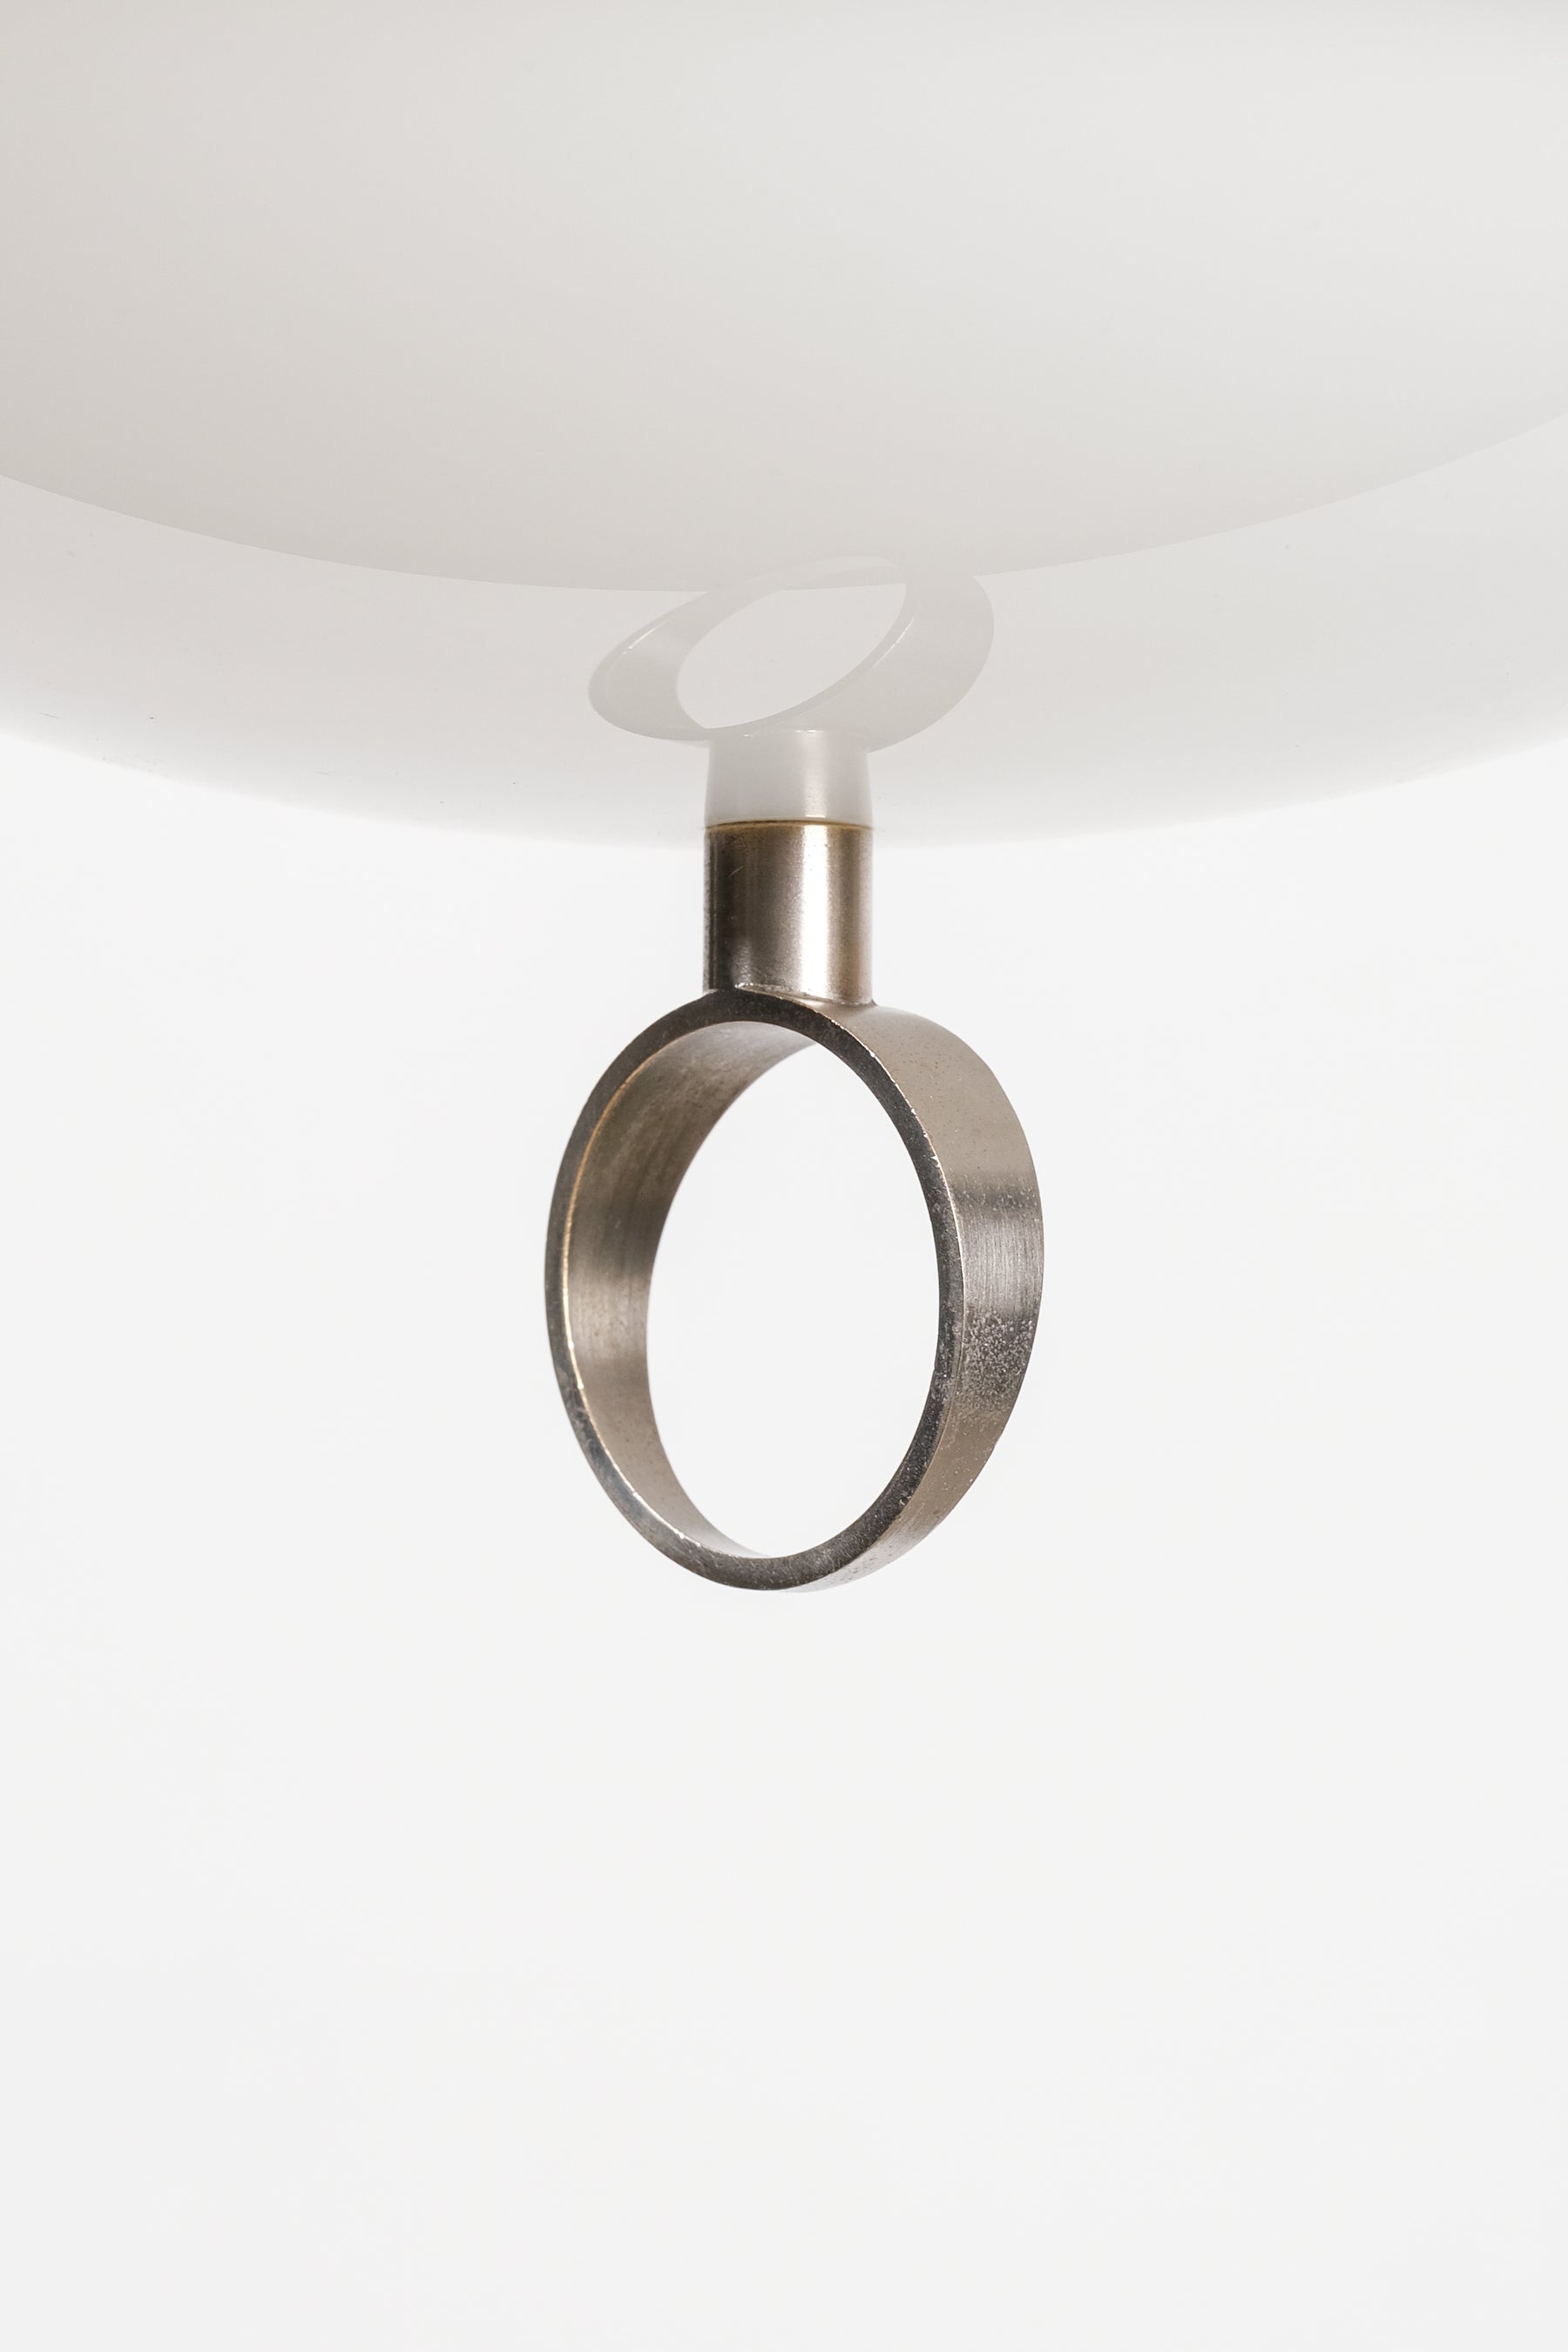 Ceiling Lamp, Height Adjustable, Stilux, Milano, 60s